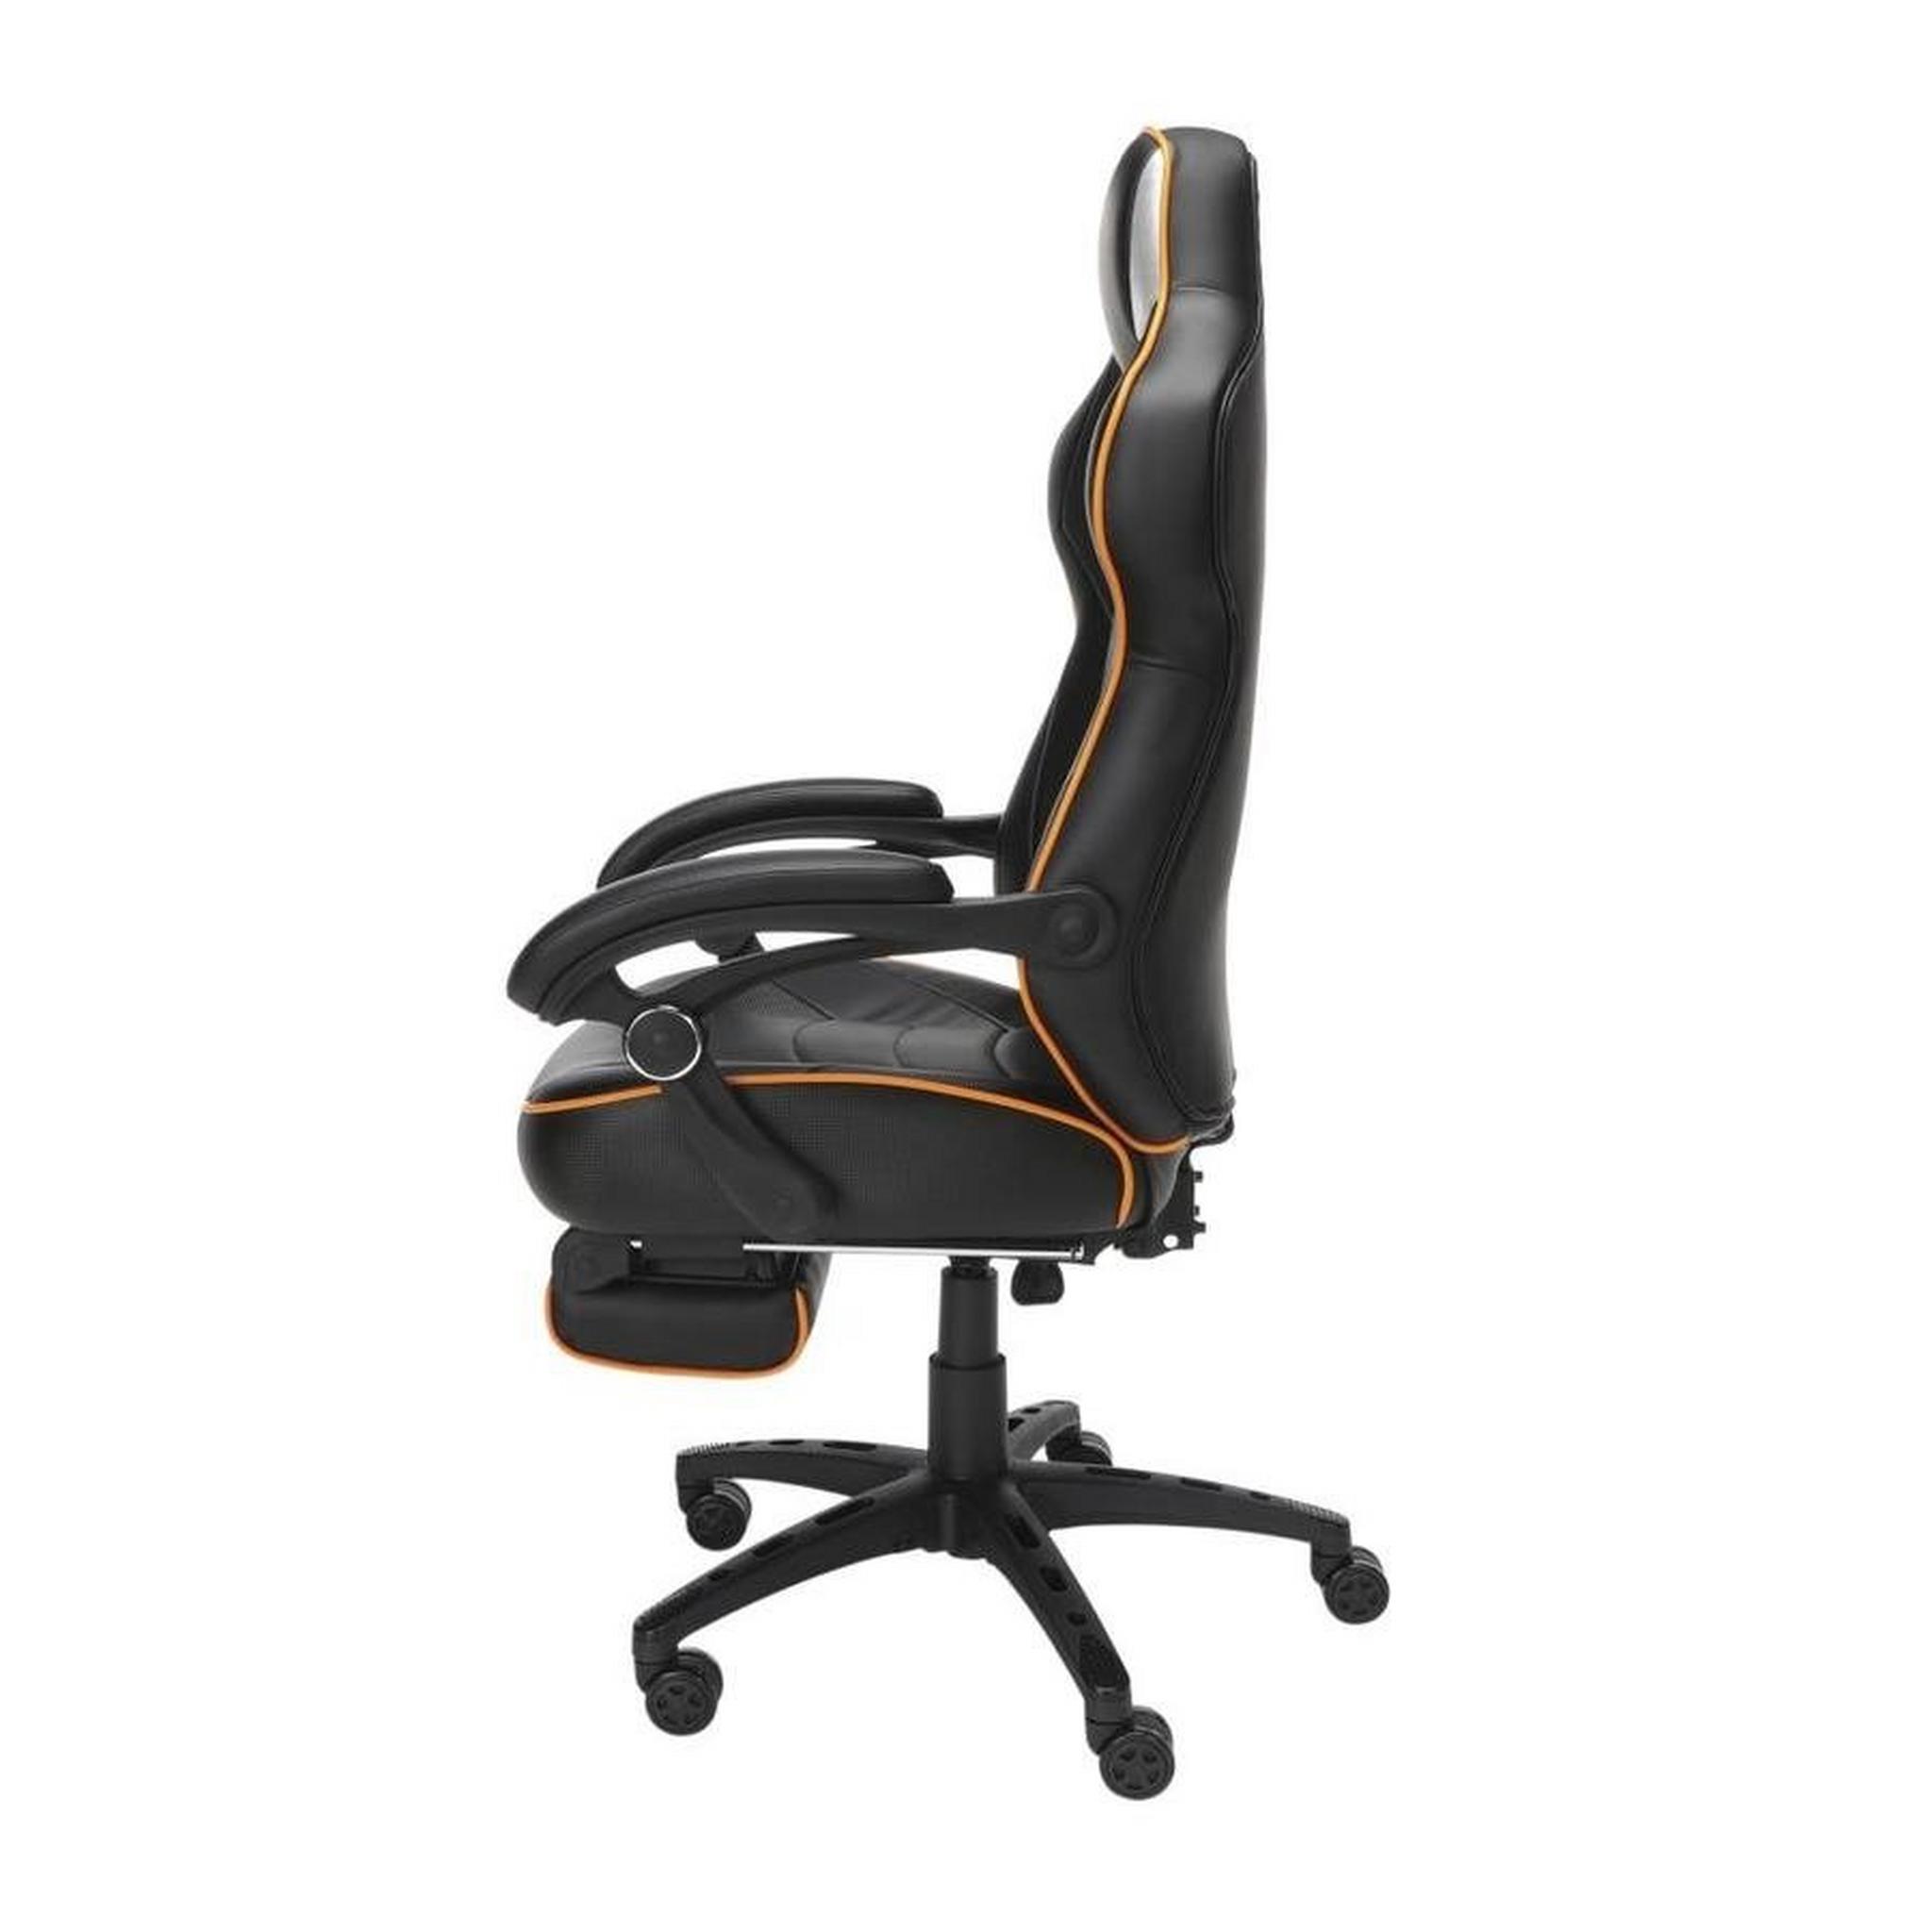 Respawn Fortnite Omega XI Gaming Chair